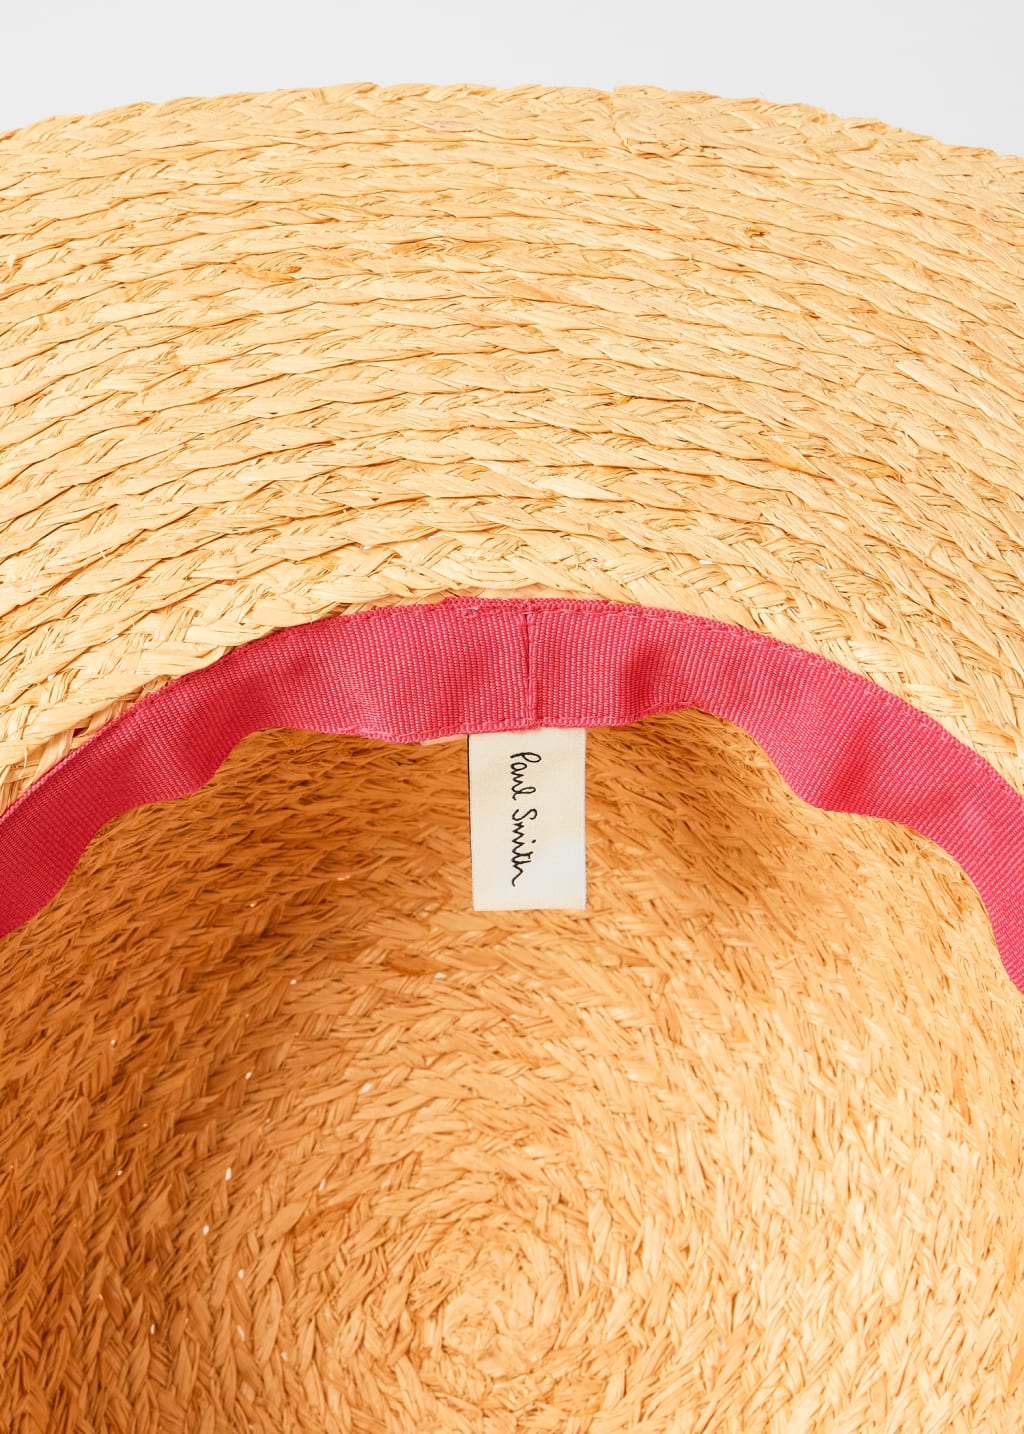 Detail View - Women's Wide Brim Straw Sun Hat Paul Smith